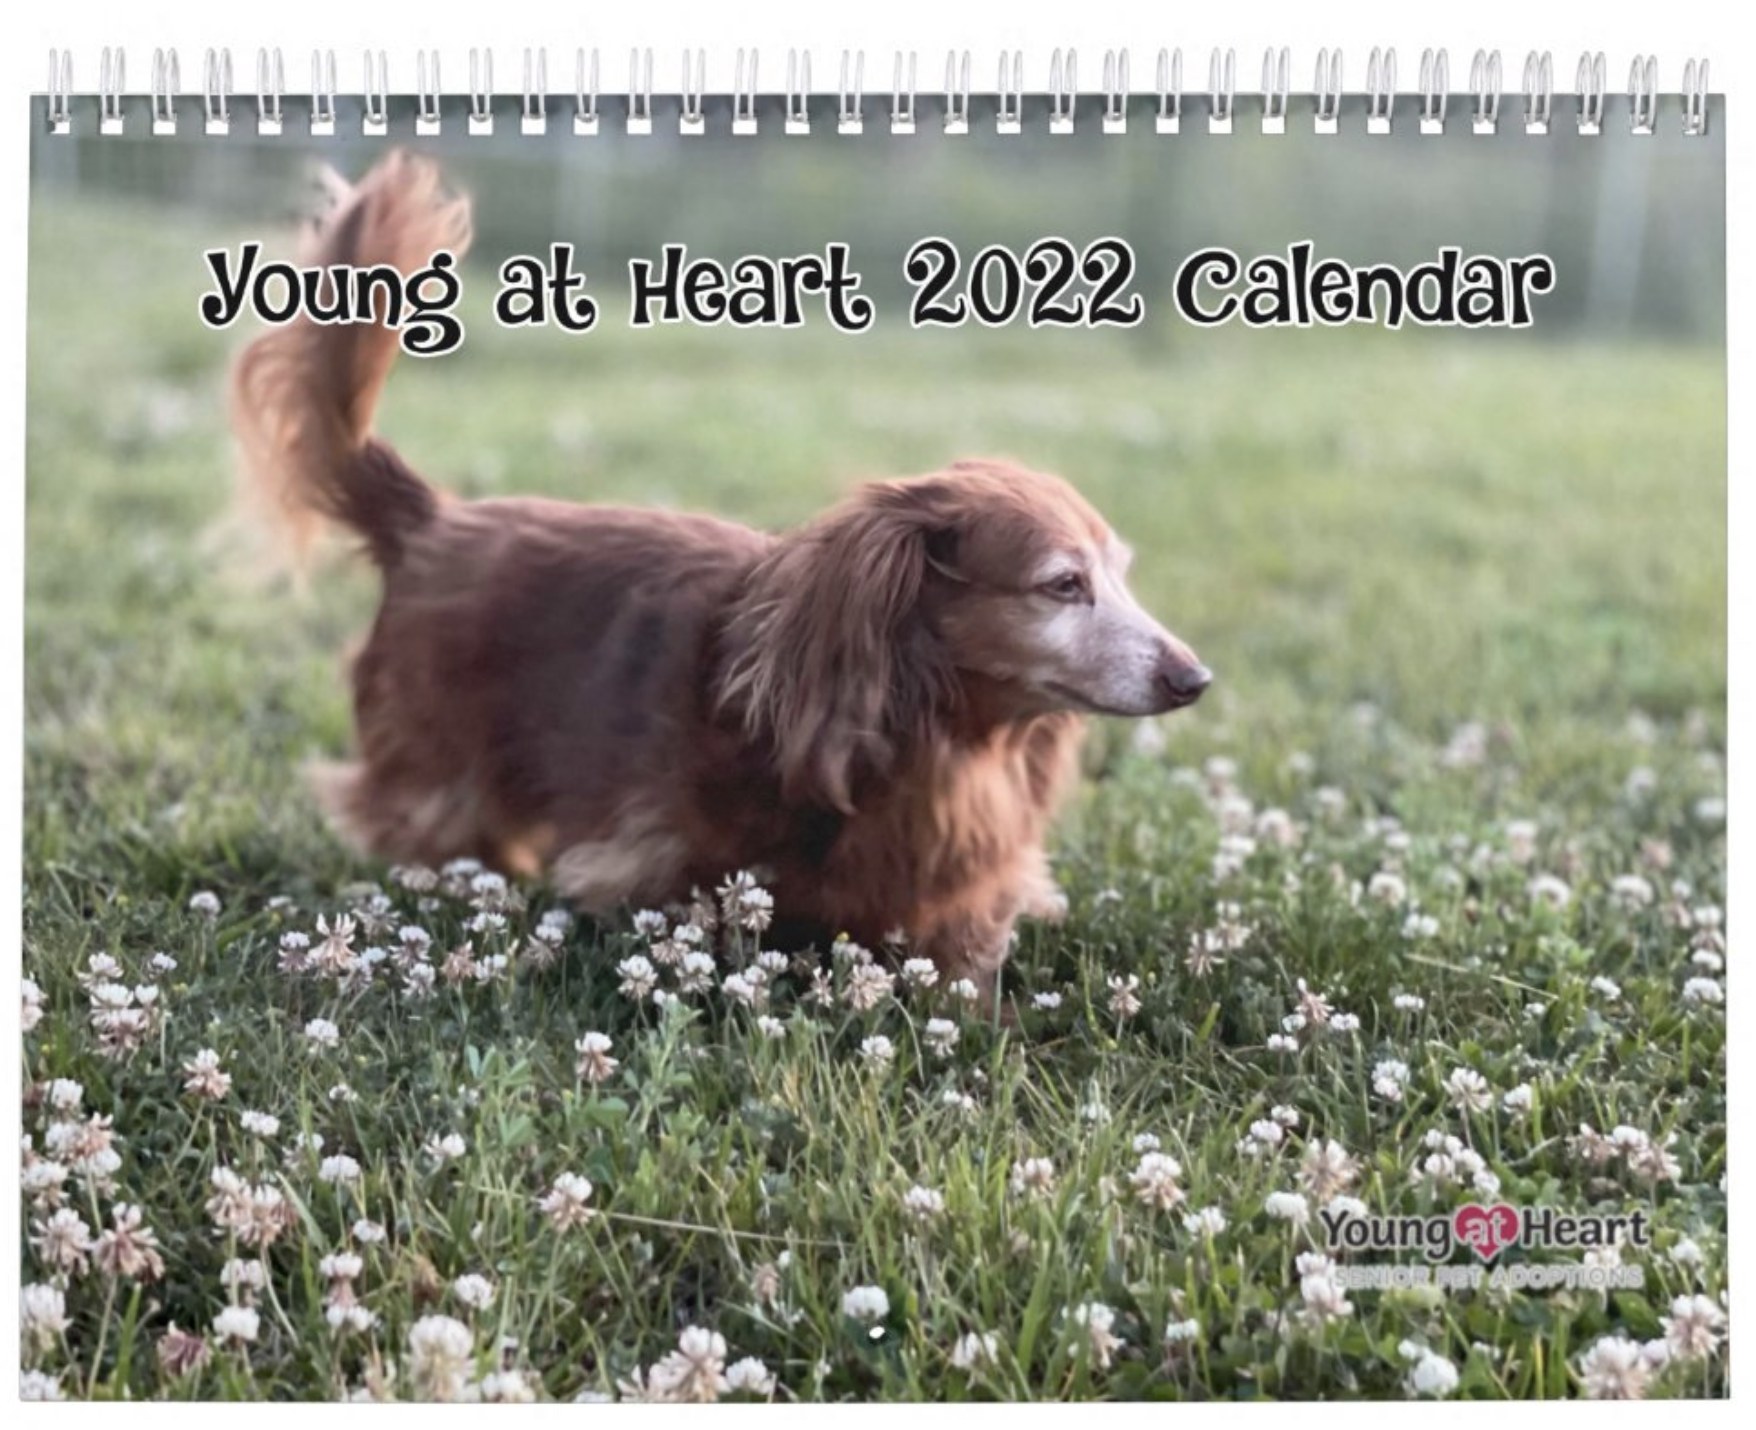 Young at Heart Calendar